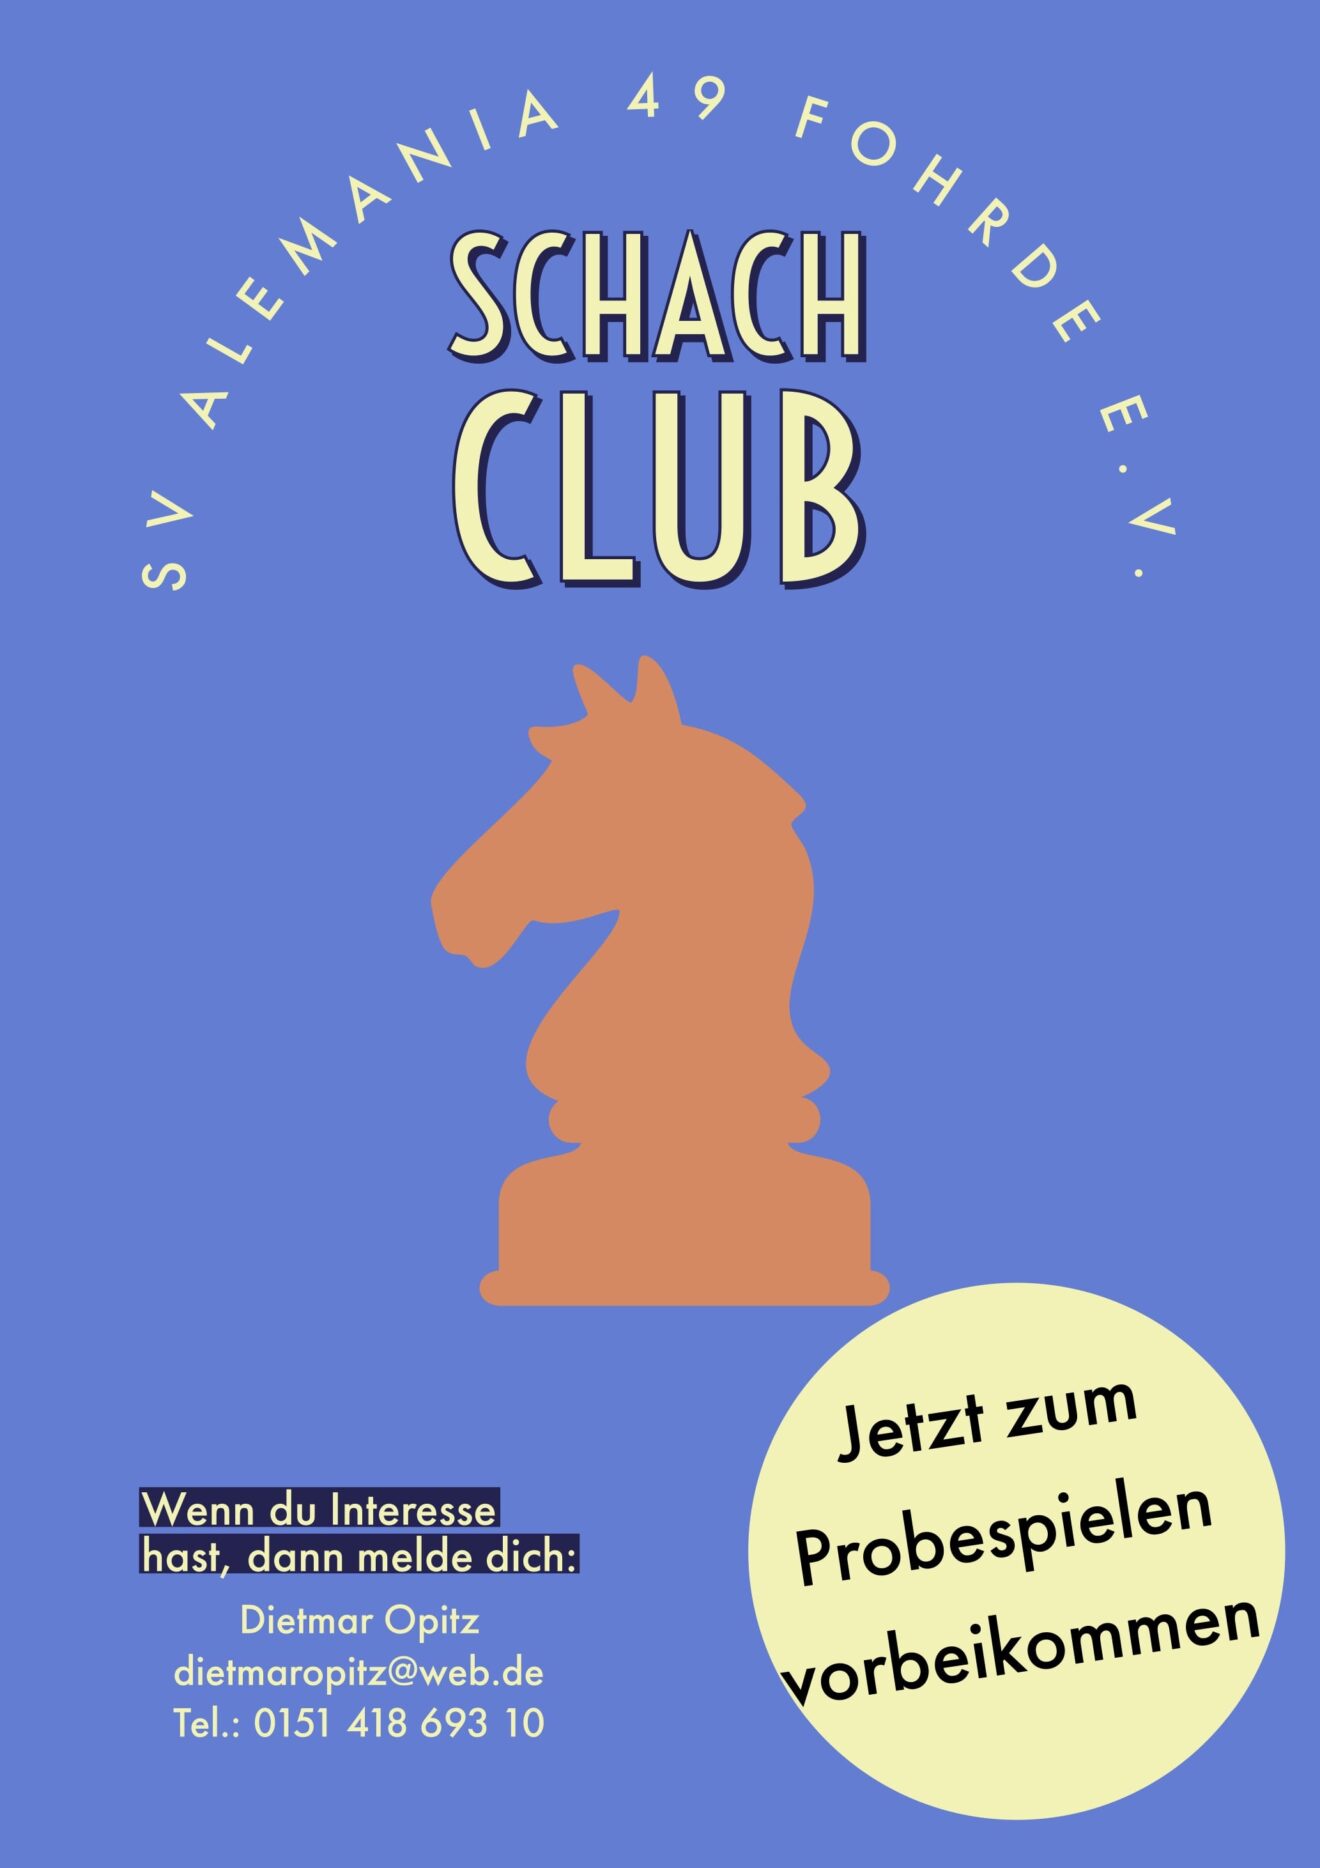 Schachgruppe des SV Alemania 49 Fohrde e.V. trifft sich wieder!